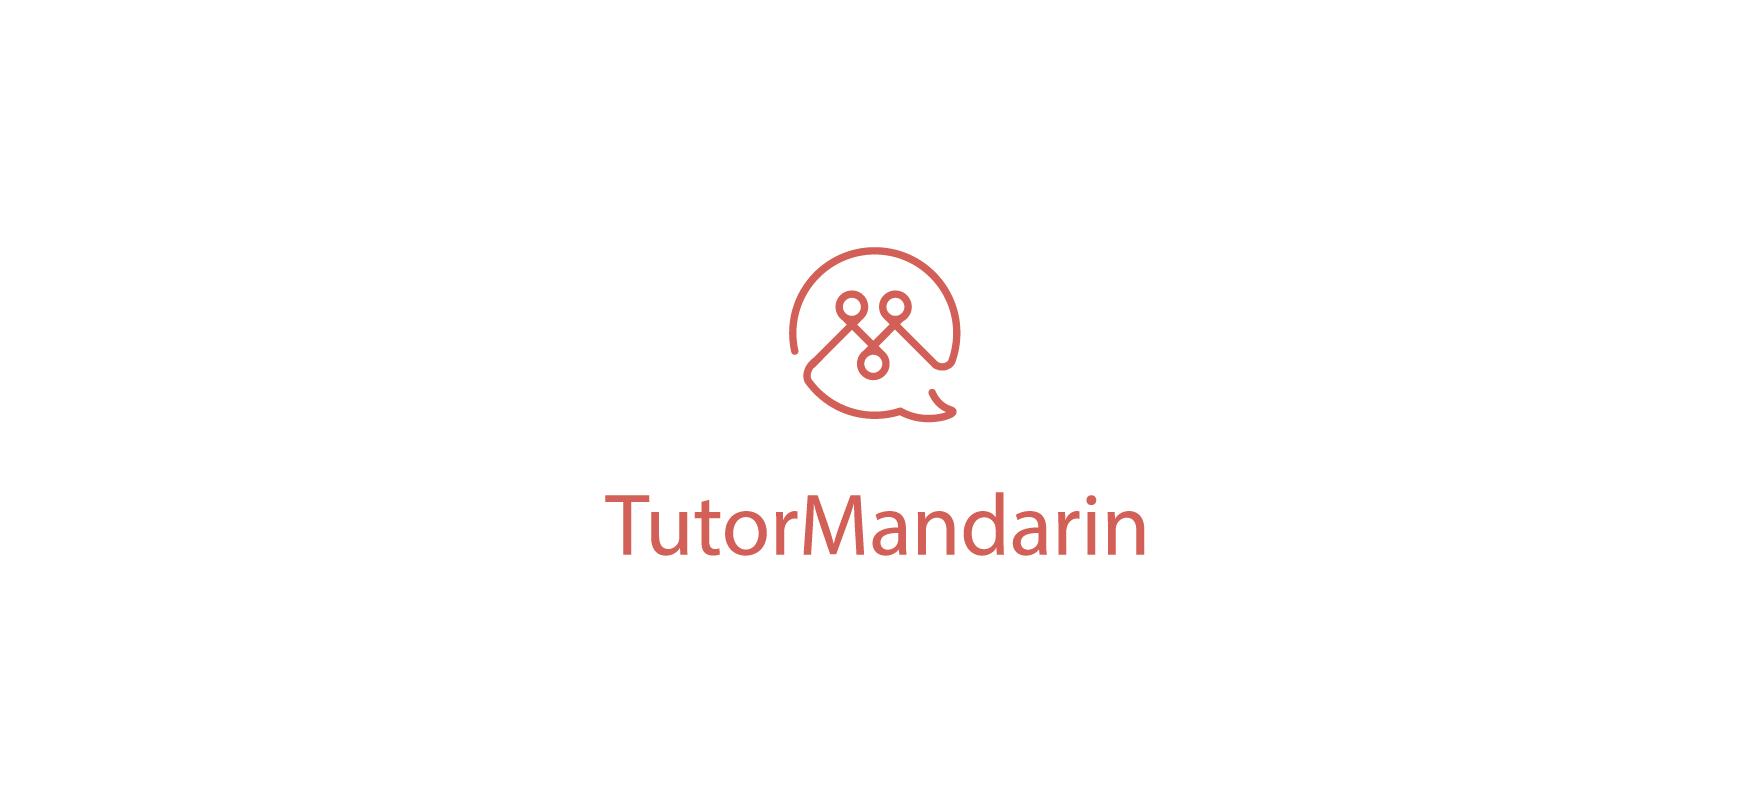 TutorMandarin Press Kit - Standing logo in red